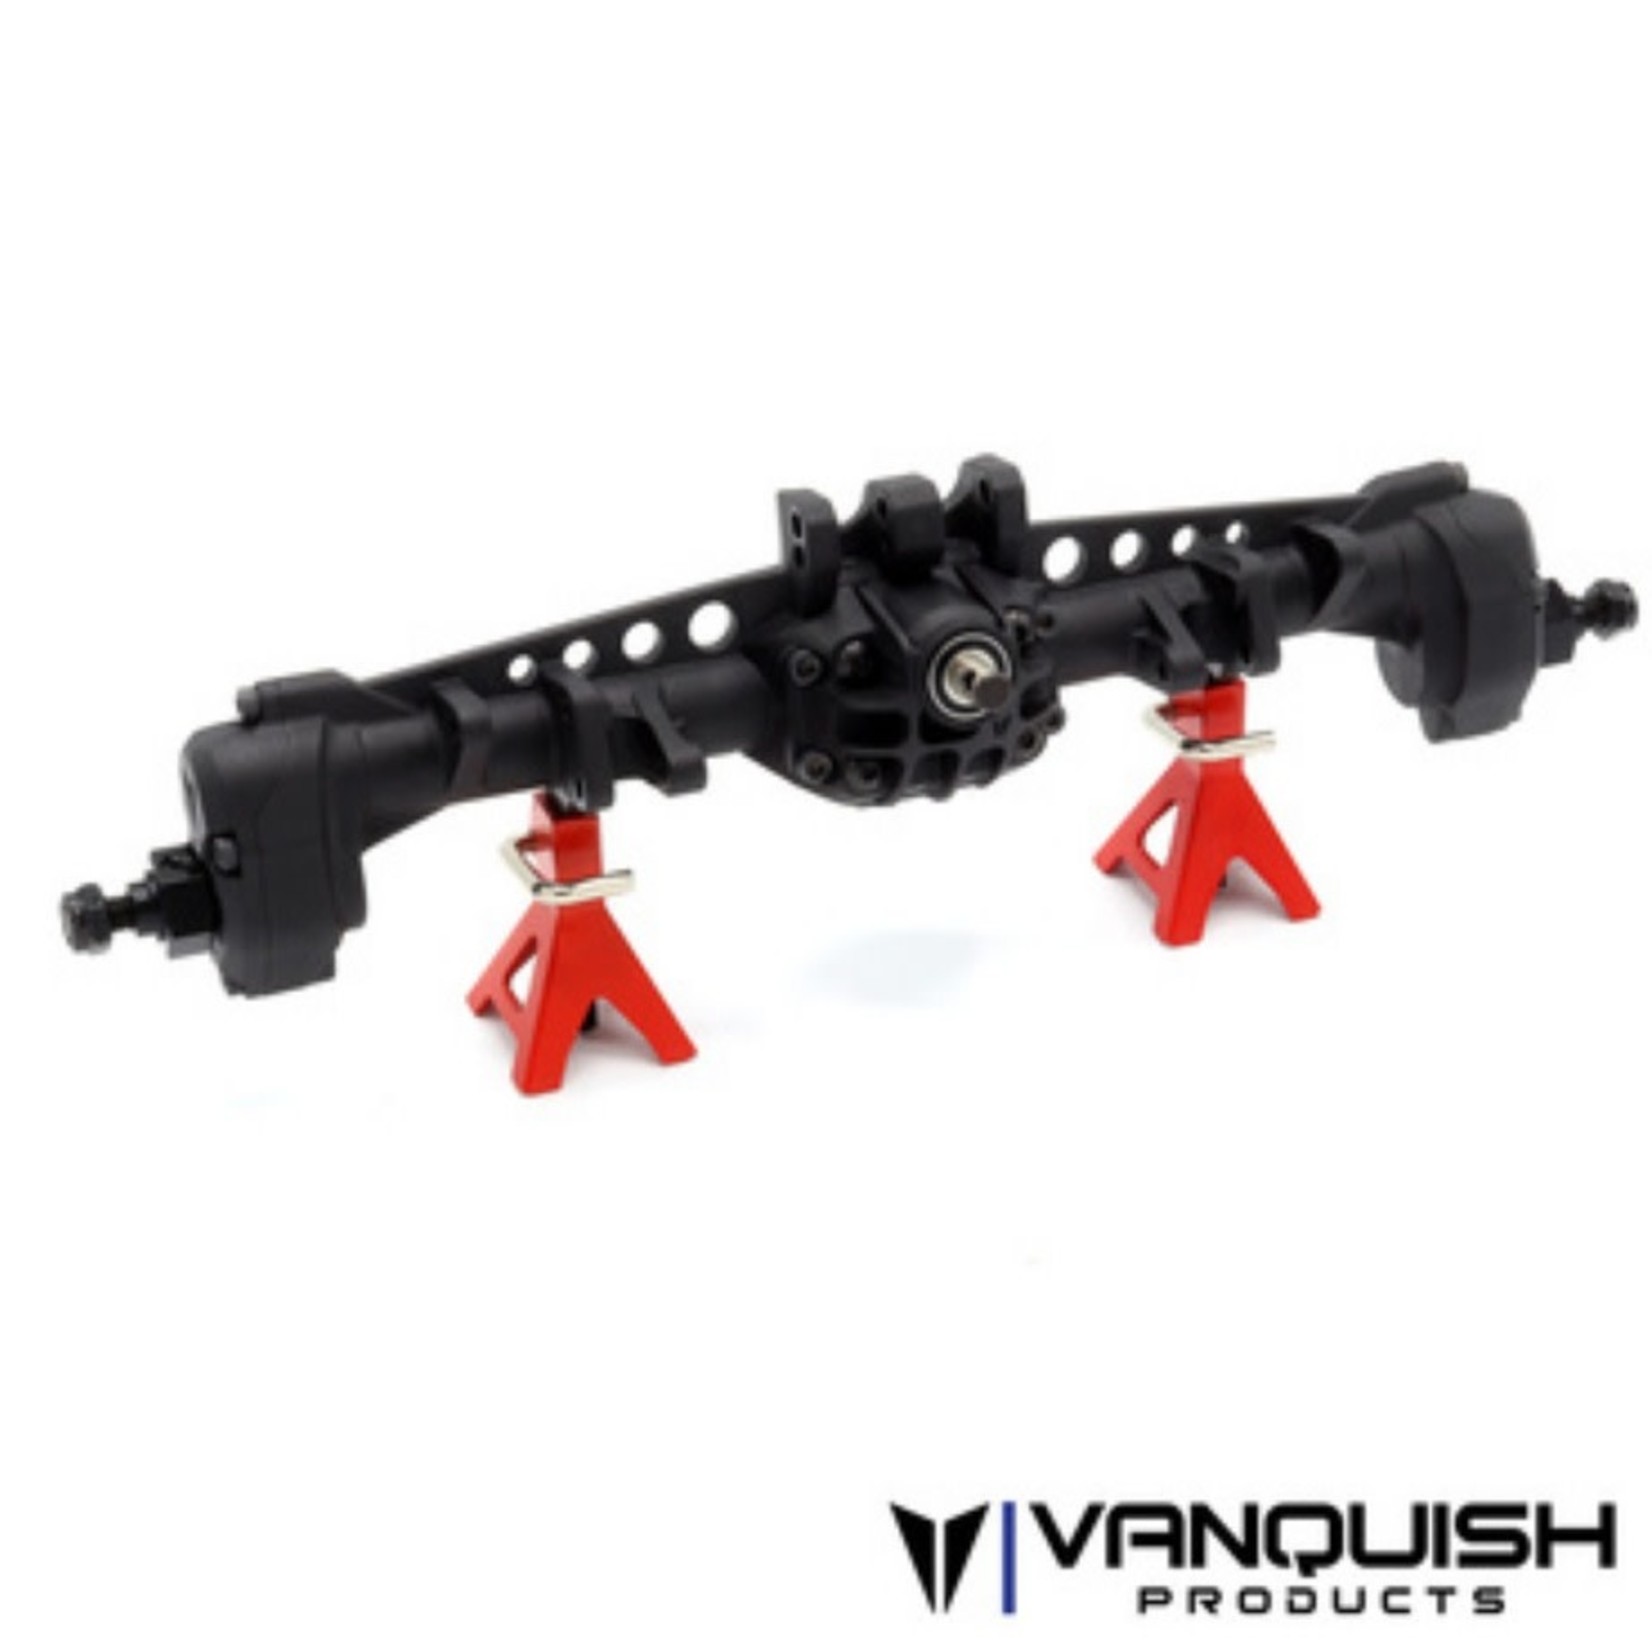 Vanquish Products Vanquish F10 Portal Front Axle Set #VPS08601